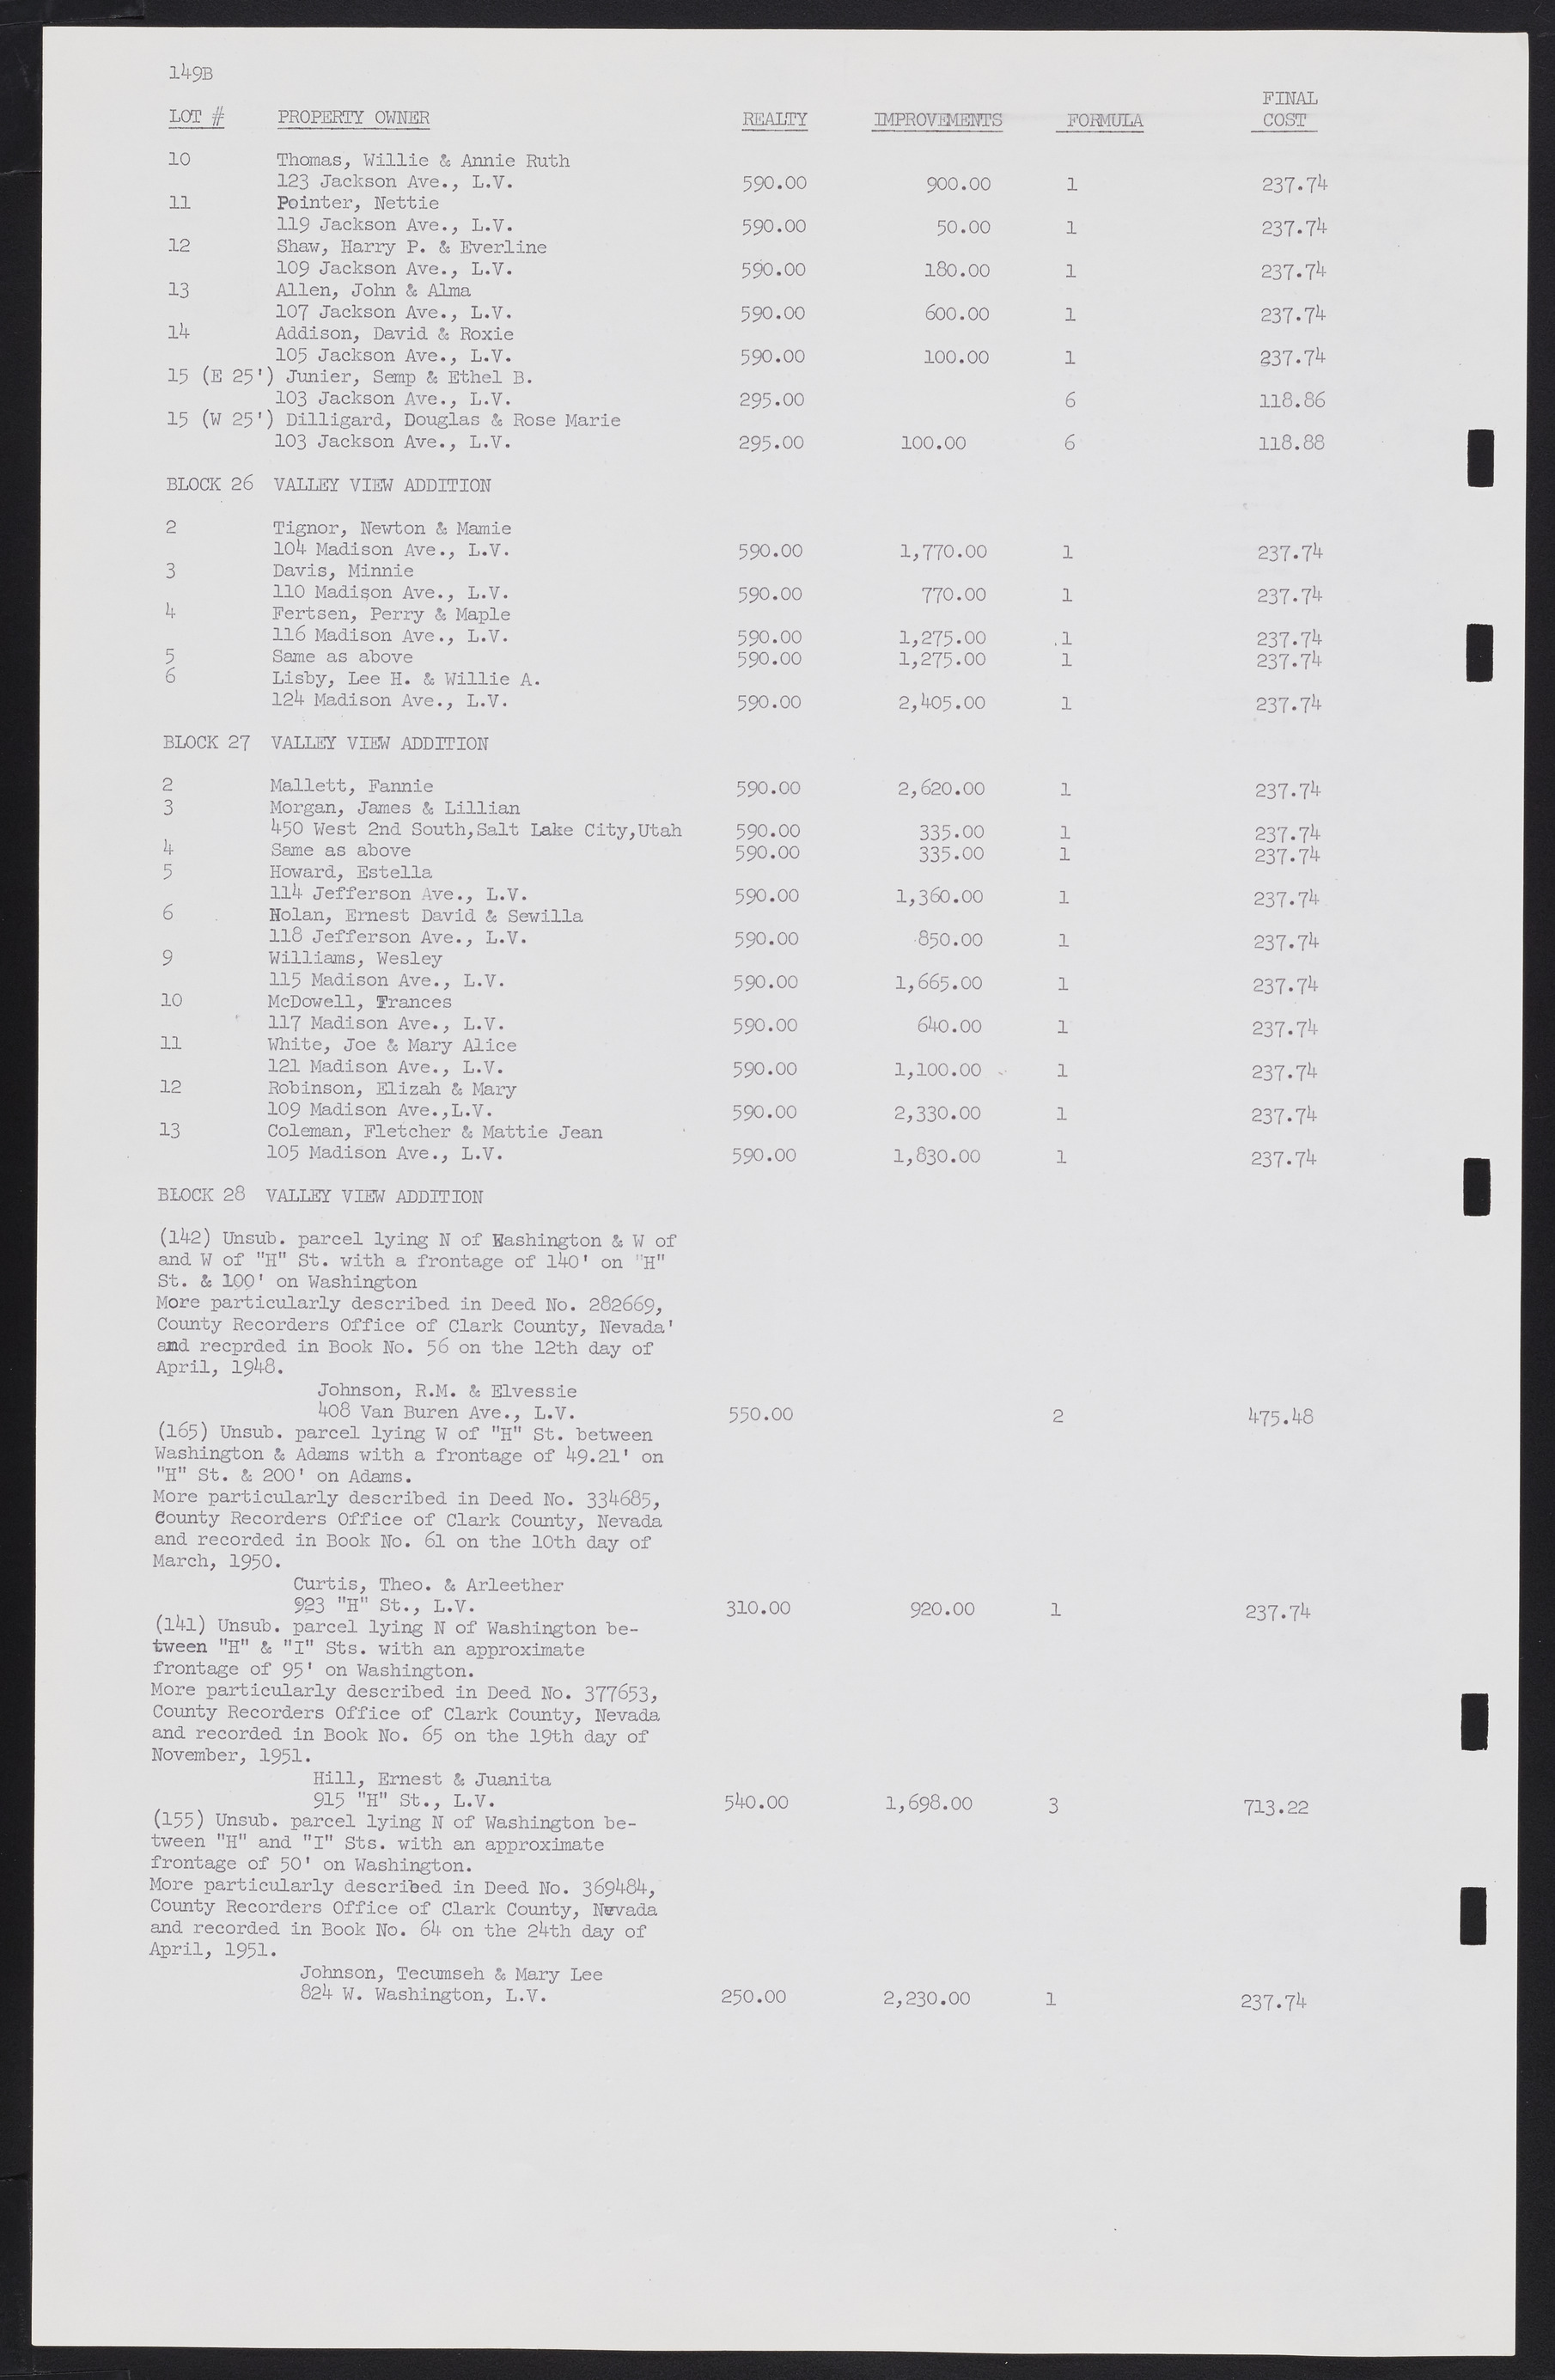 Las Vegas City Commission Minutes, September 21, 1955 to November 20, 1957, lvc000010-160